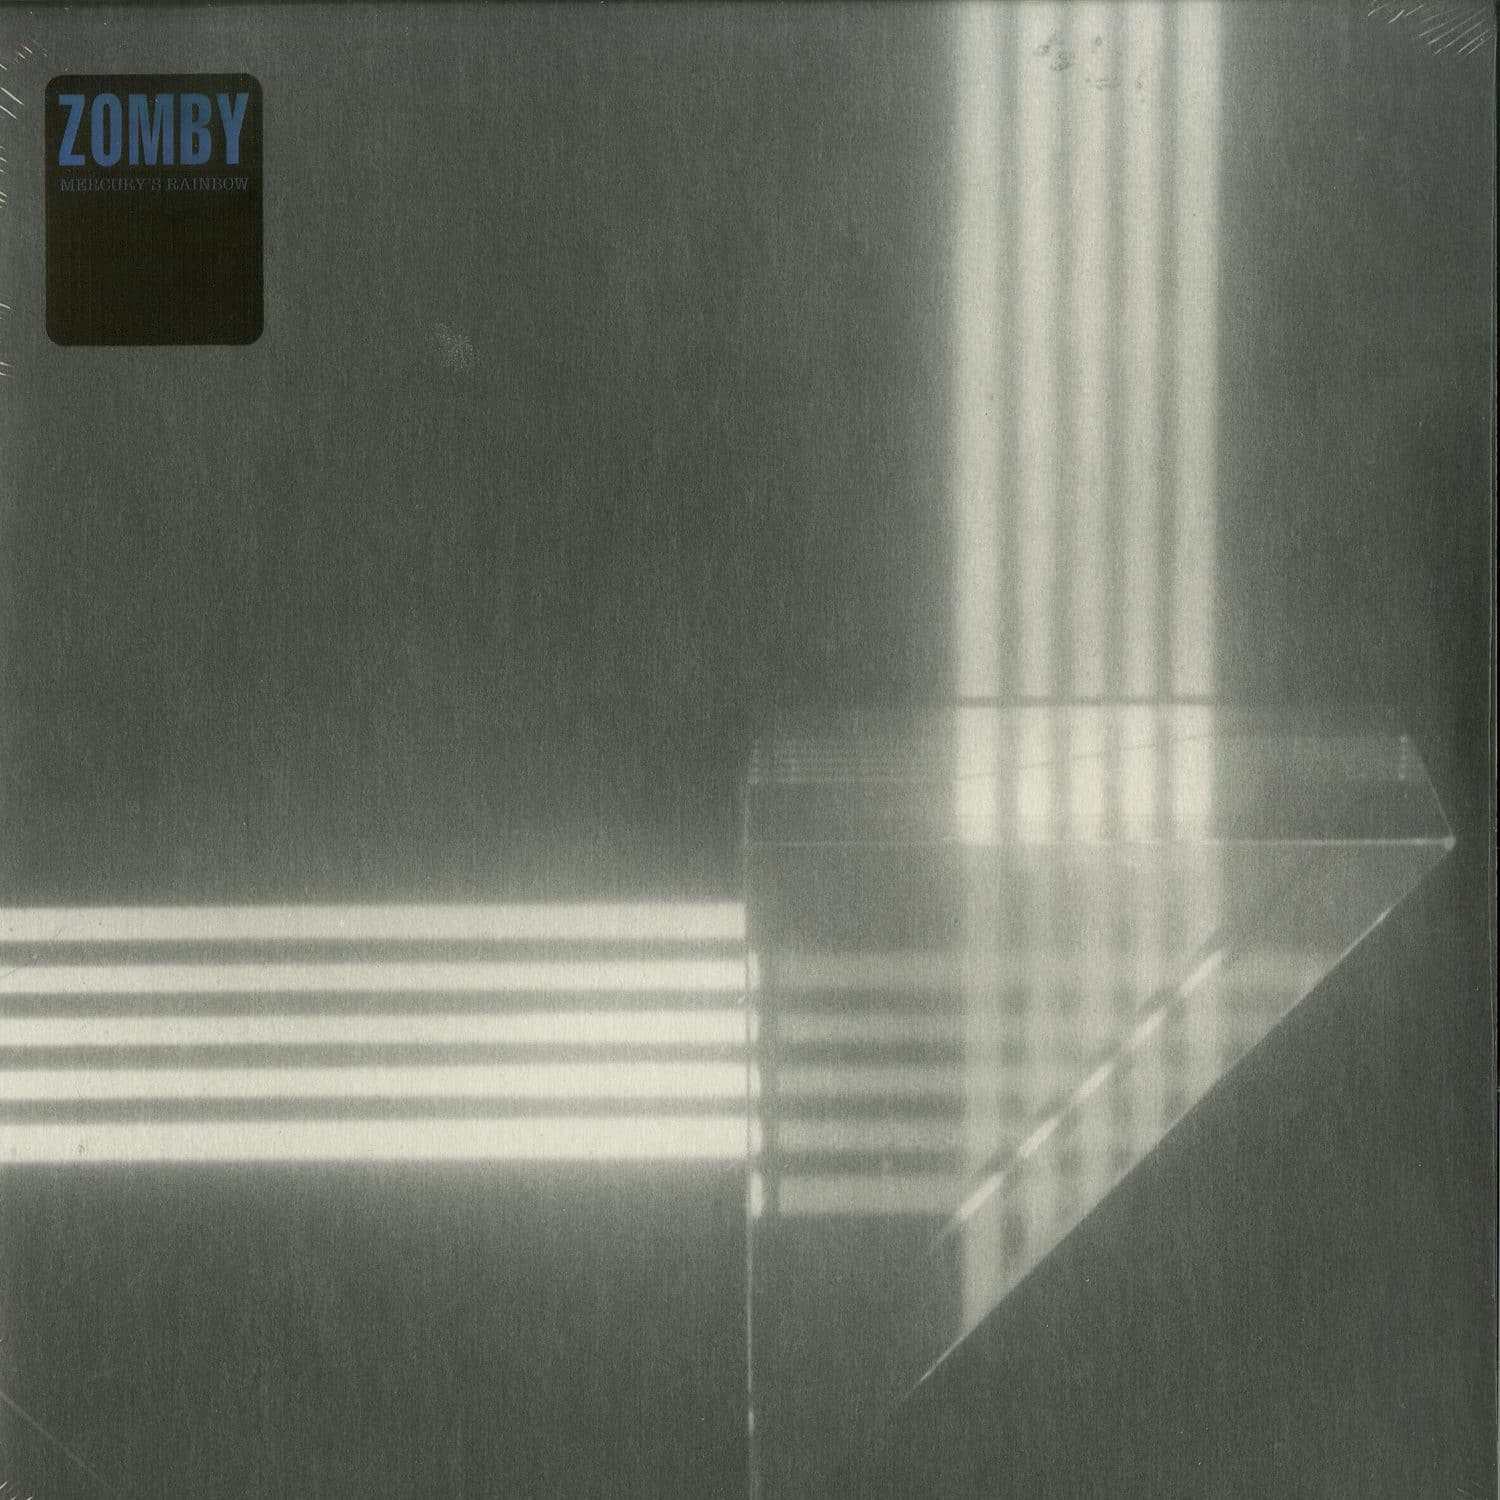 Zomby - Mercurys Rainbow 